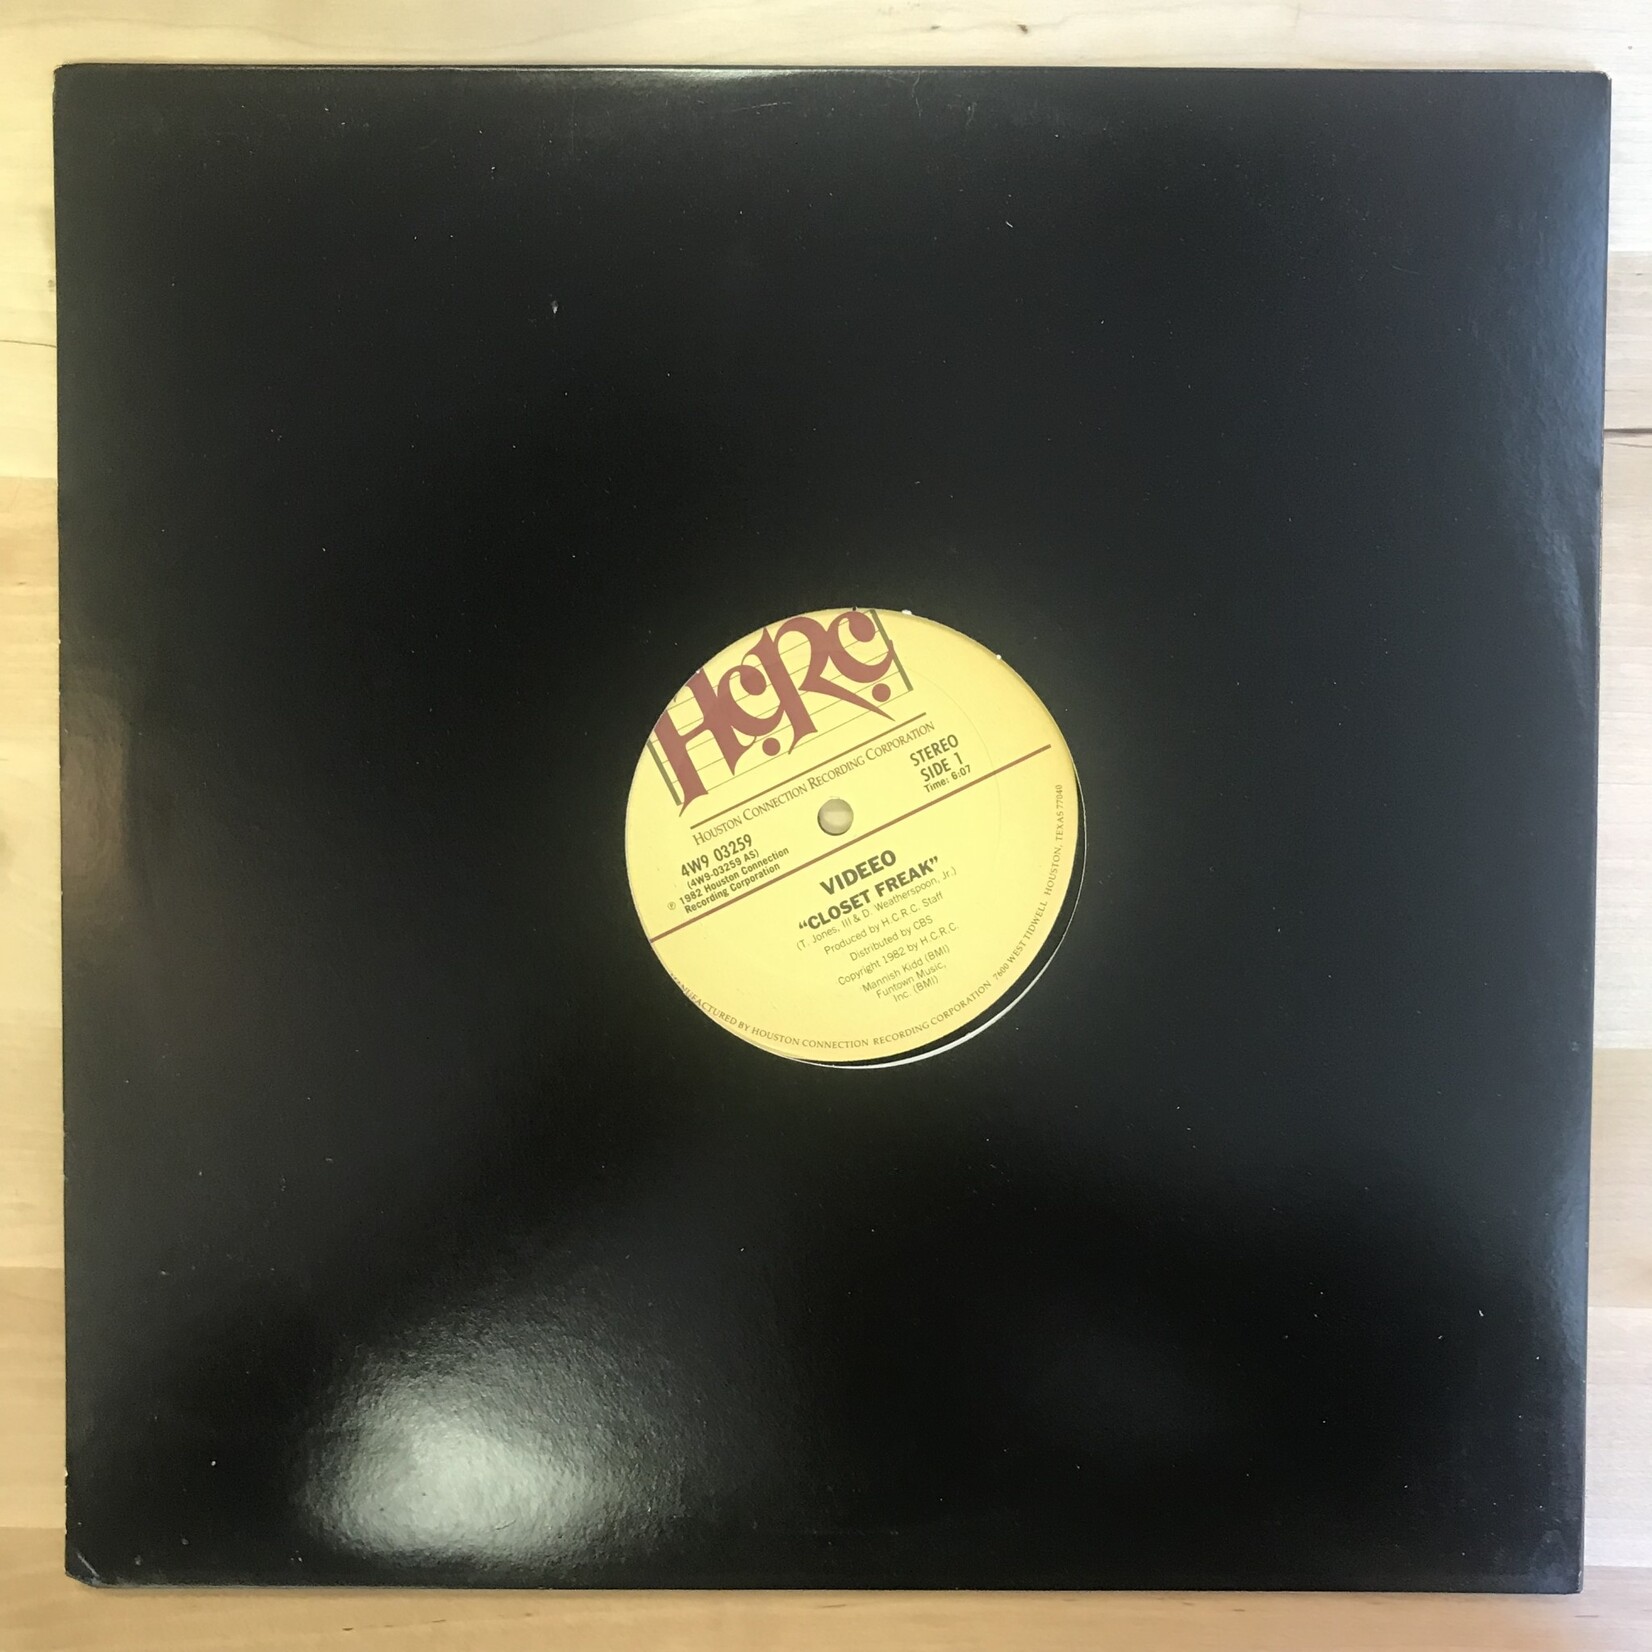 Videeo - Closet Freak - 4W9 03259 - Vinyl 12-Inch Single (USED)